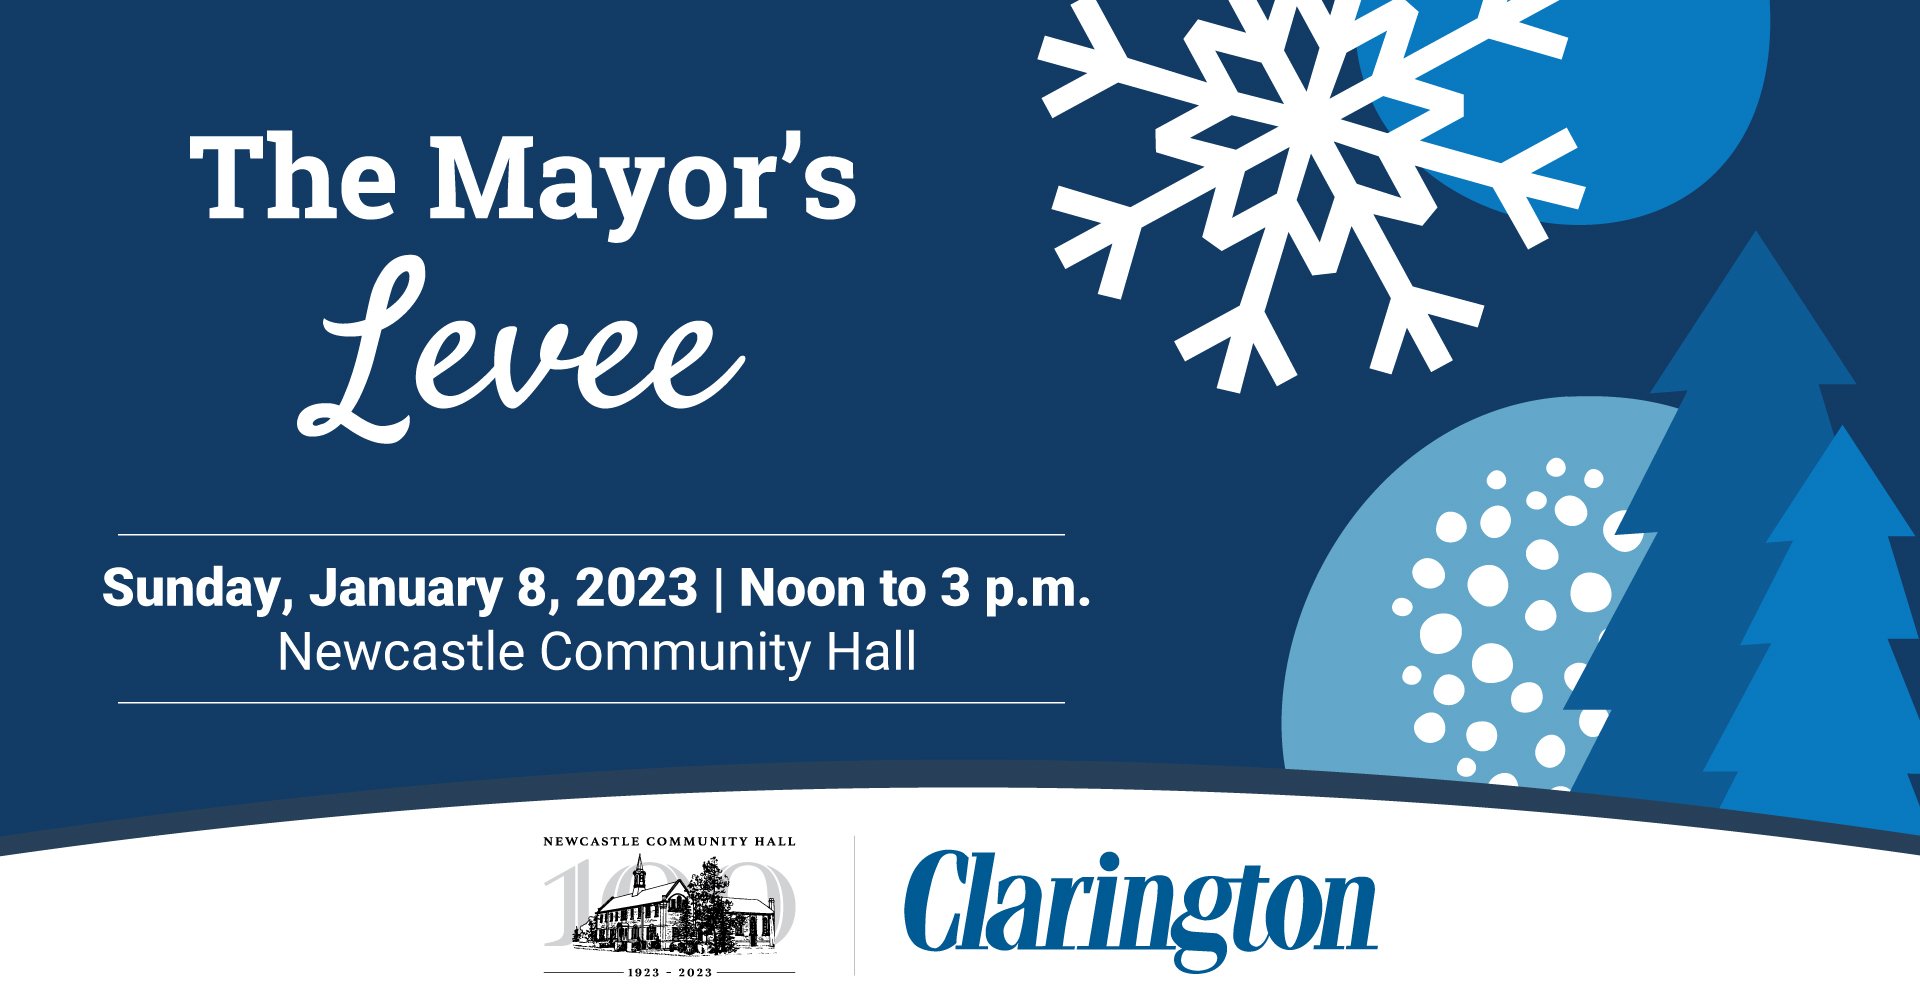 Mayor's Levee - Sunday, January 8, 2023